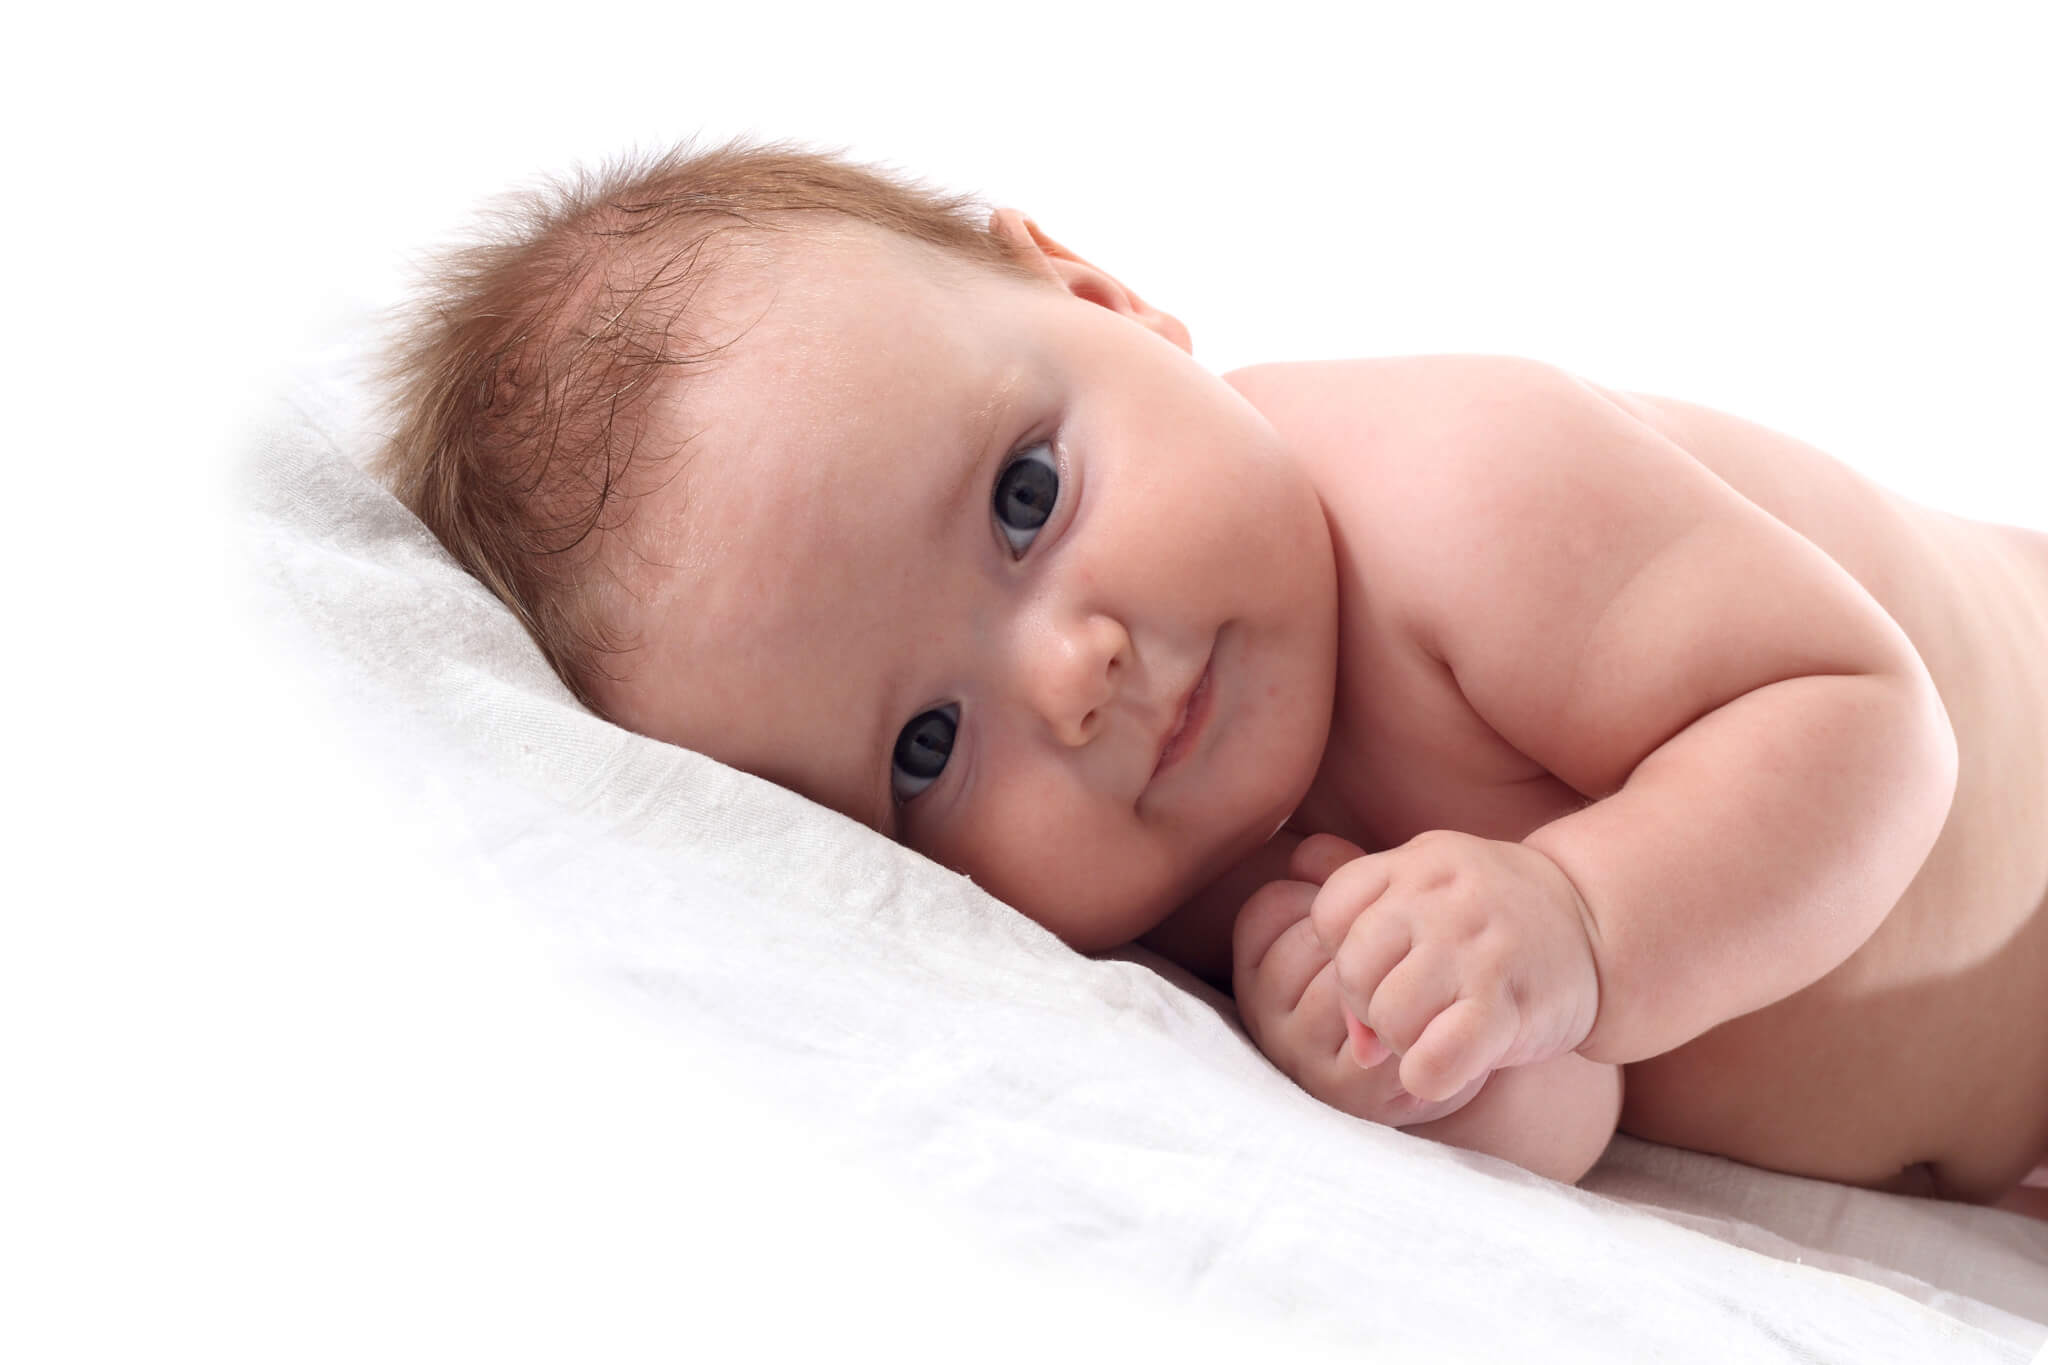 Why do we need genetic testing for benign neonatal seizures?